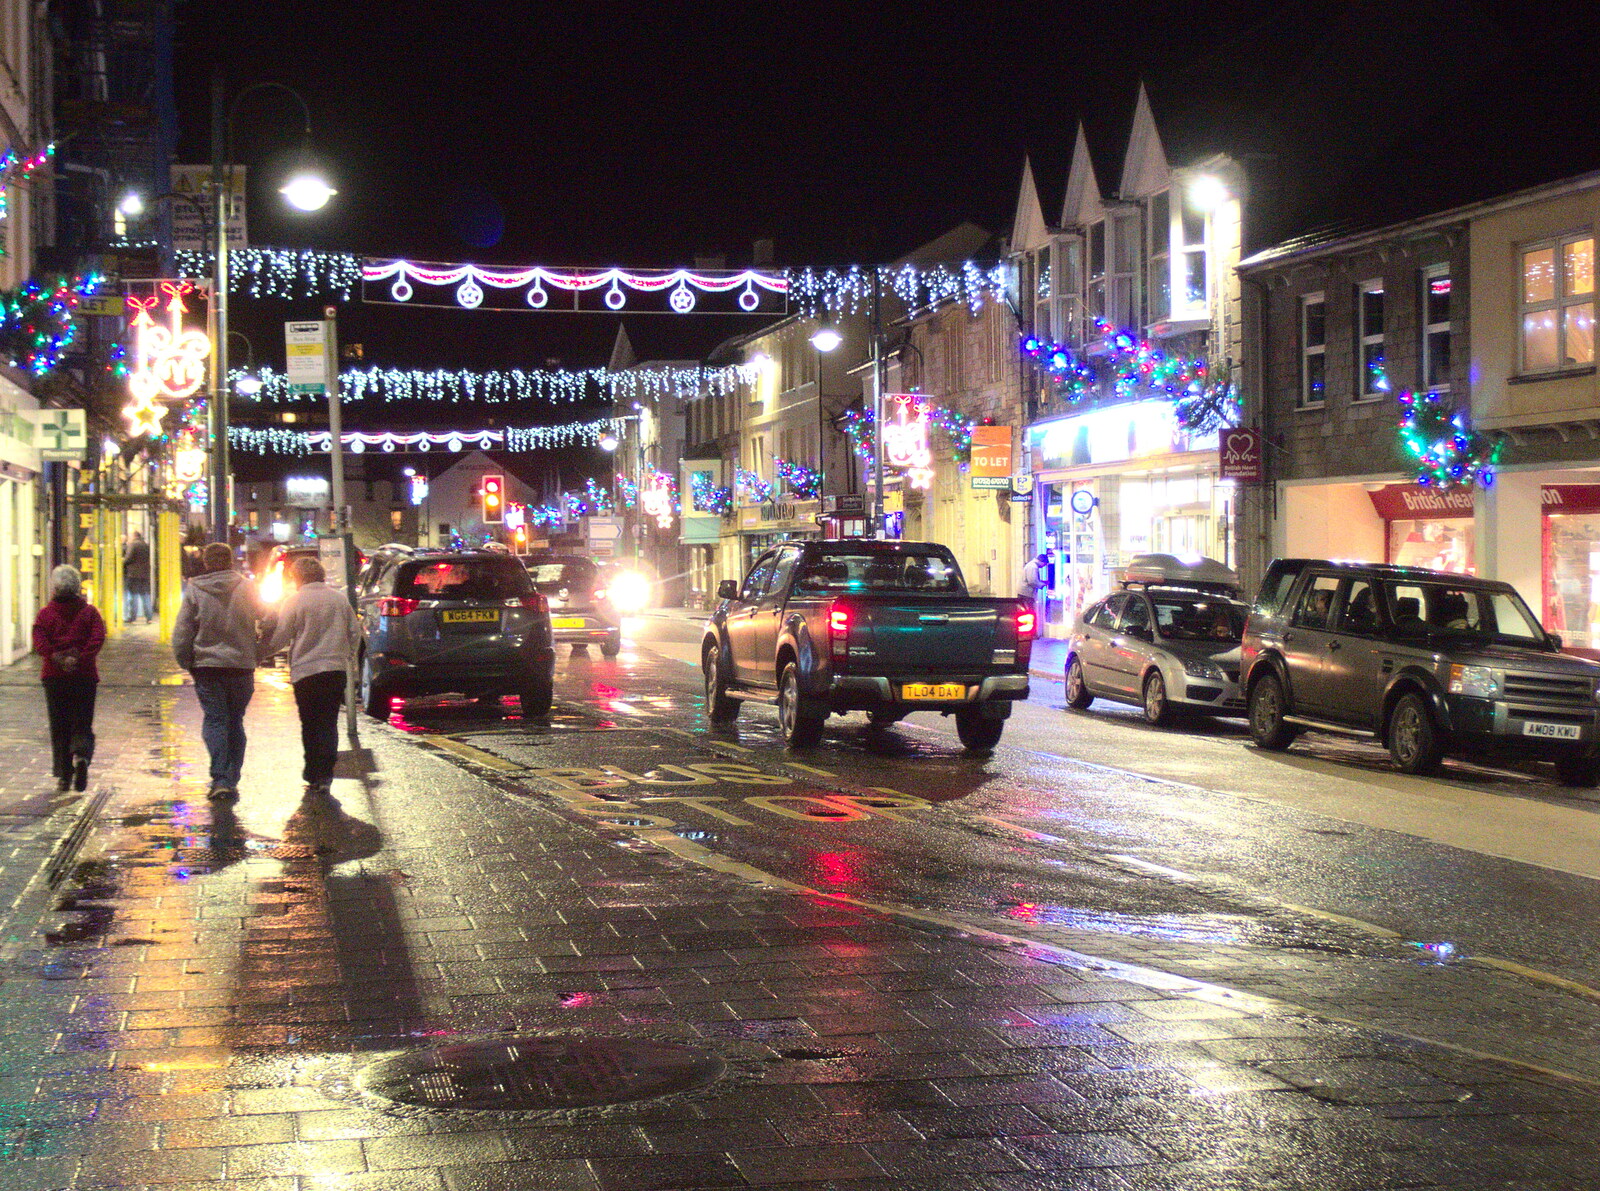 Fore Street in Okehampton from New Year's Eve in Spreyton, Devon - 31st December 2017